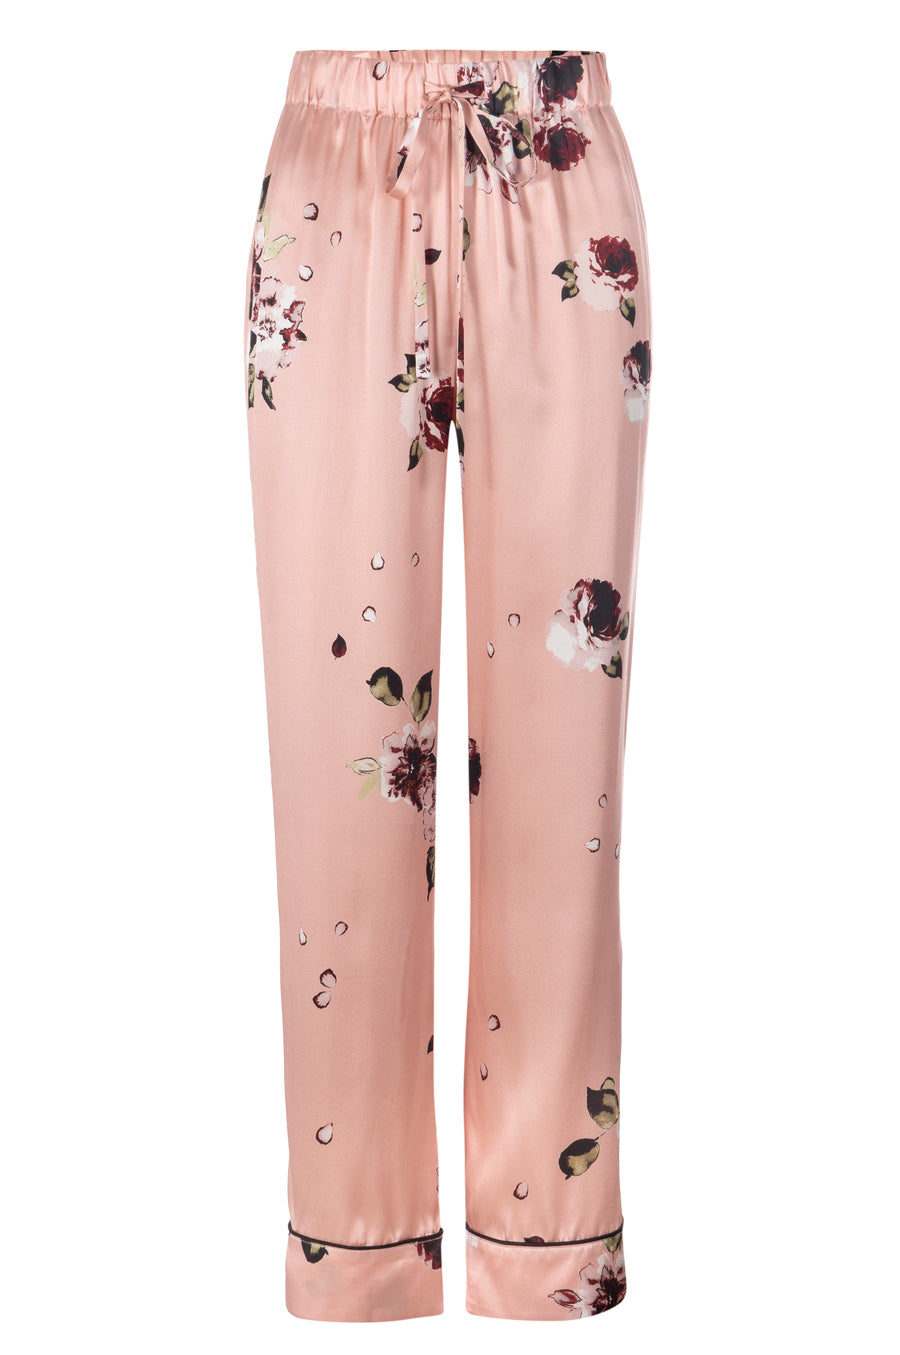 NEW Silk Charmeuse PJ Pants: Blush Floral Print